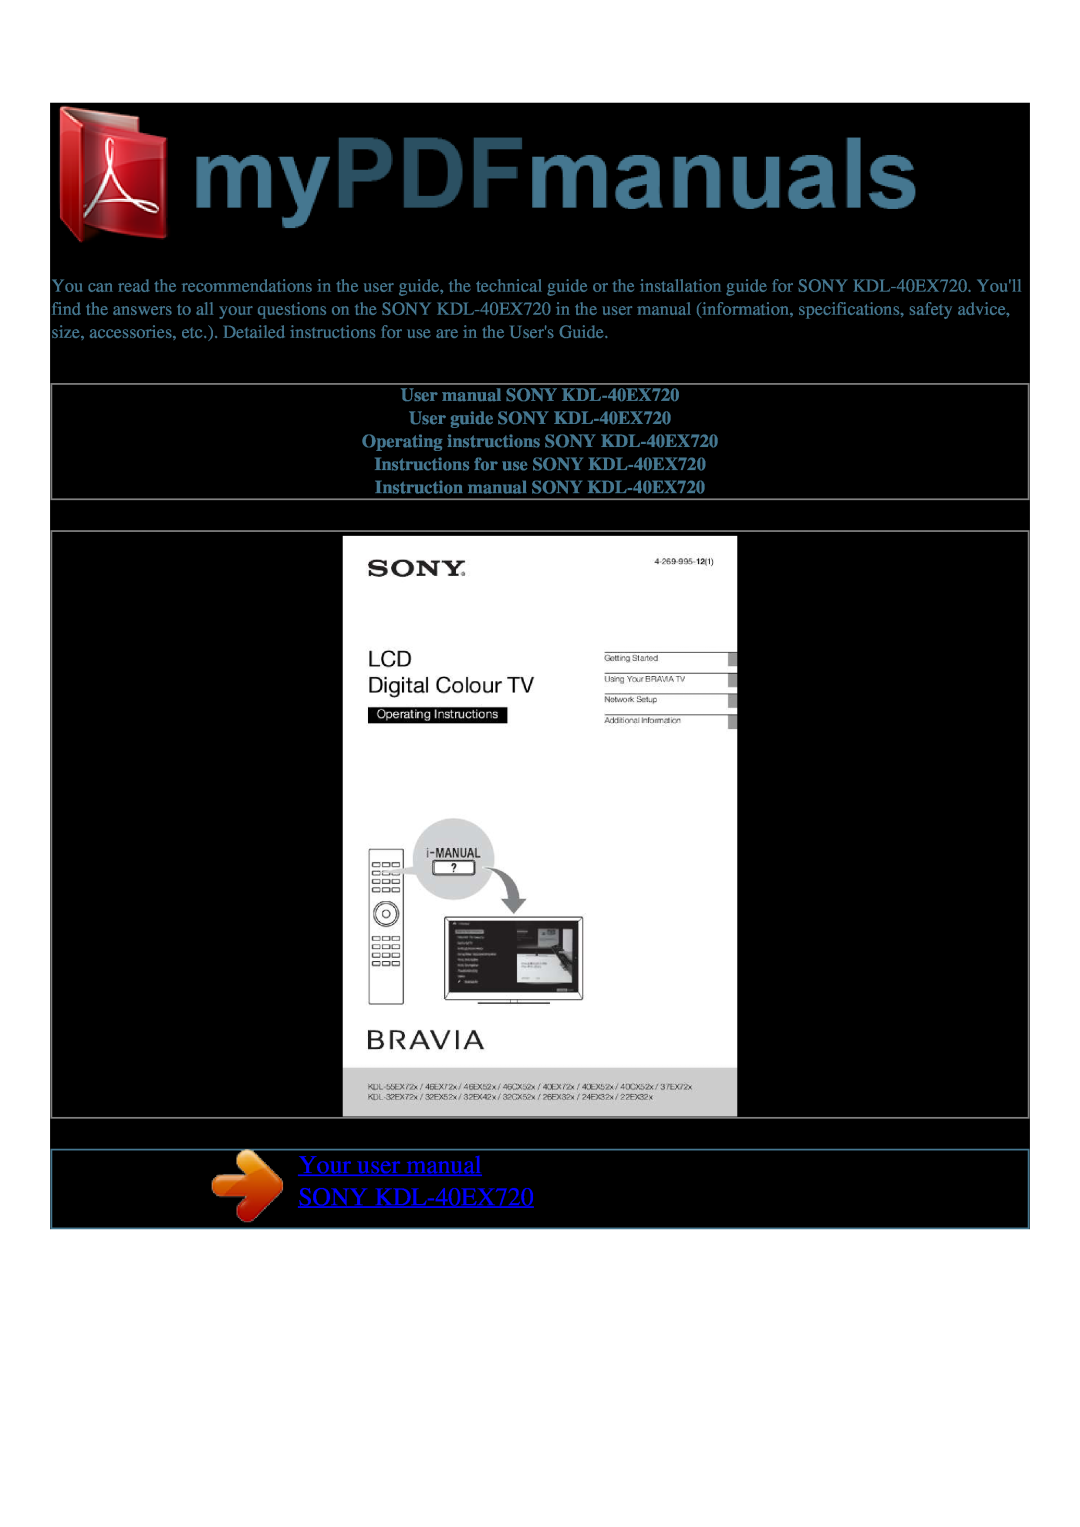 Sony user manual User manual SONY KDL-40EX720 User guide SONY KDL-40EX720, Operating instructions SONY KDL-40EX720 